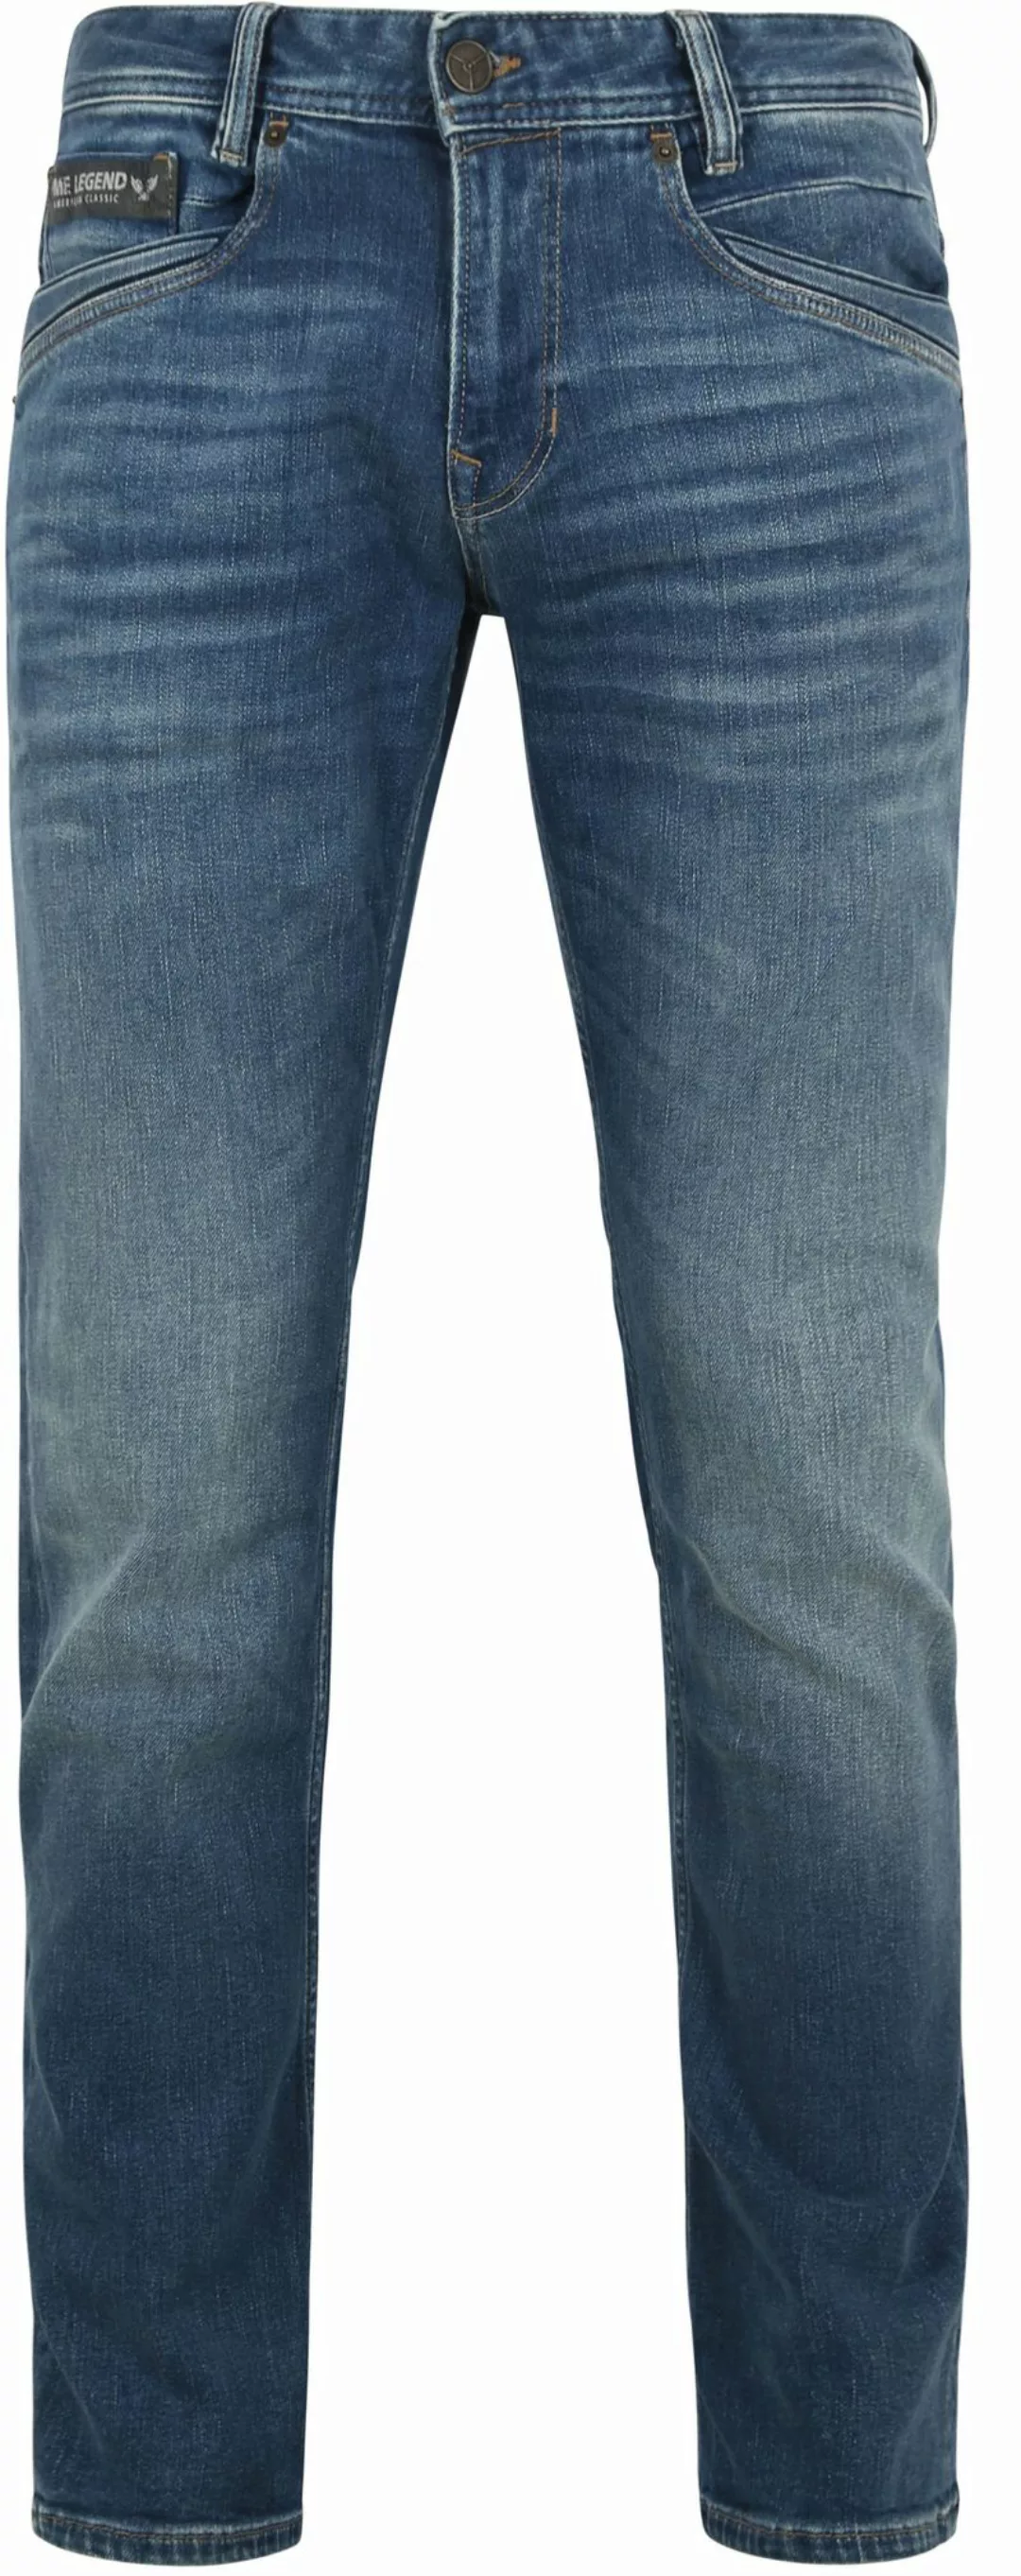 PME Legend Skyrak Jeans Blau HMB - Größe W 38 - L 34 günstig online kaufen